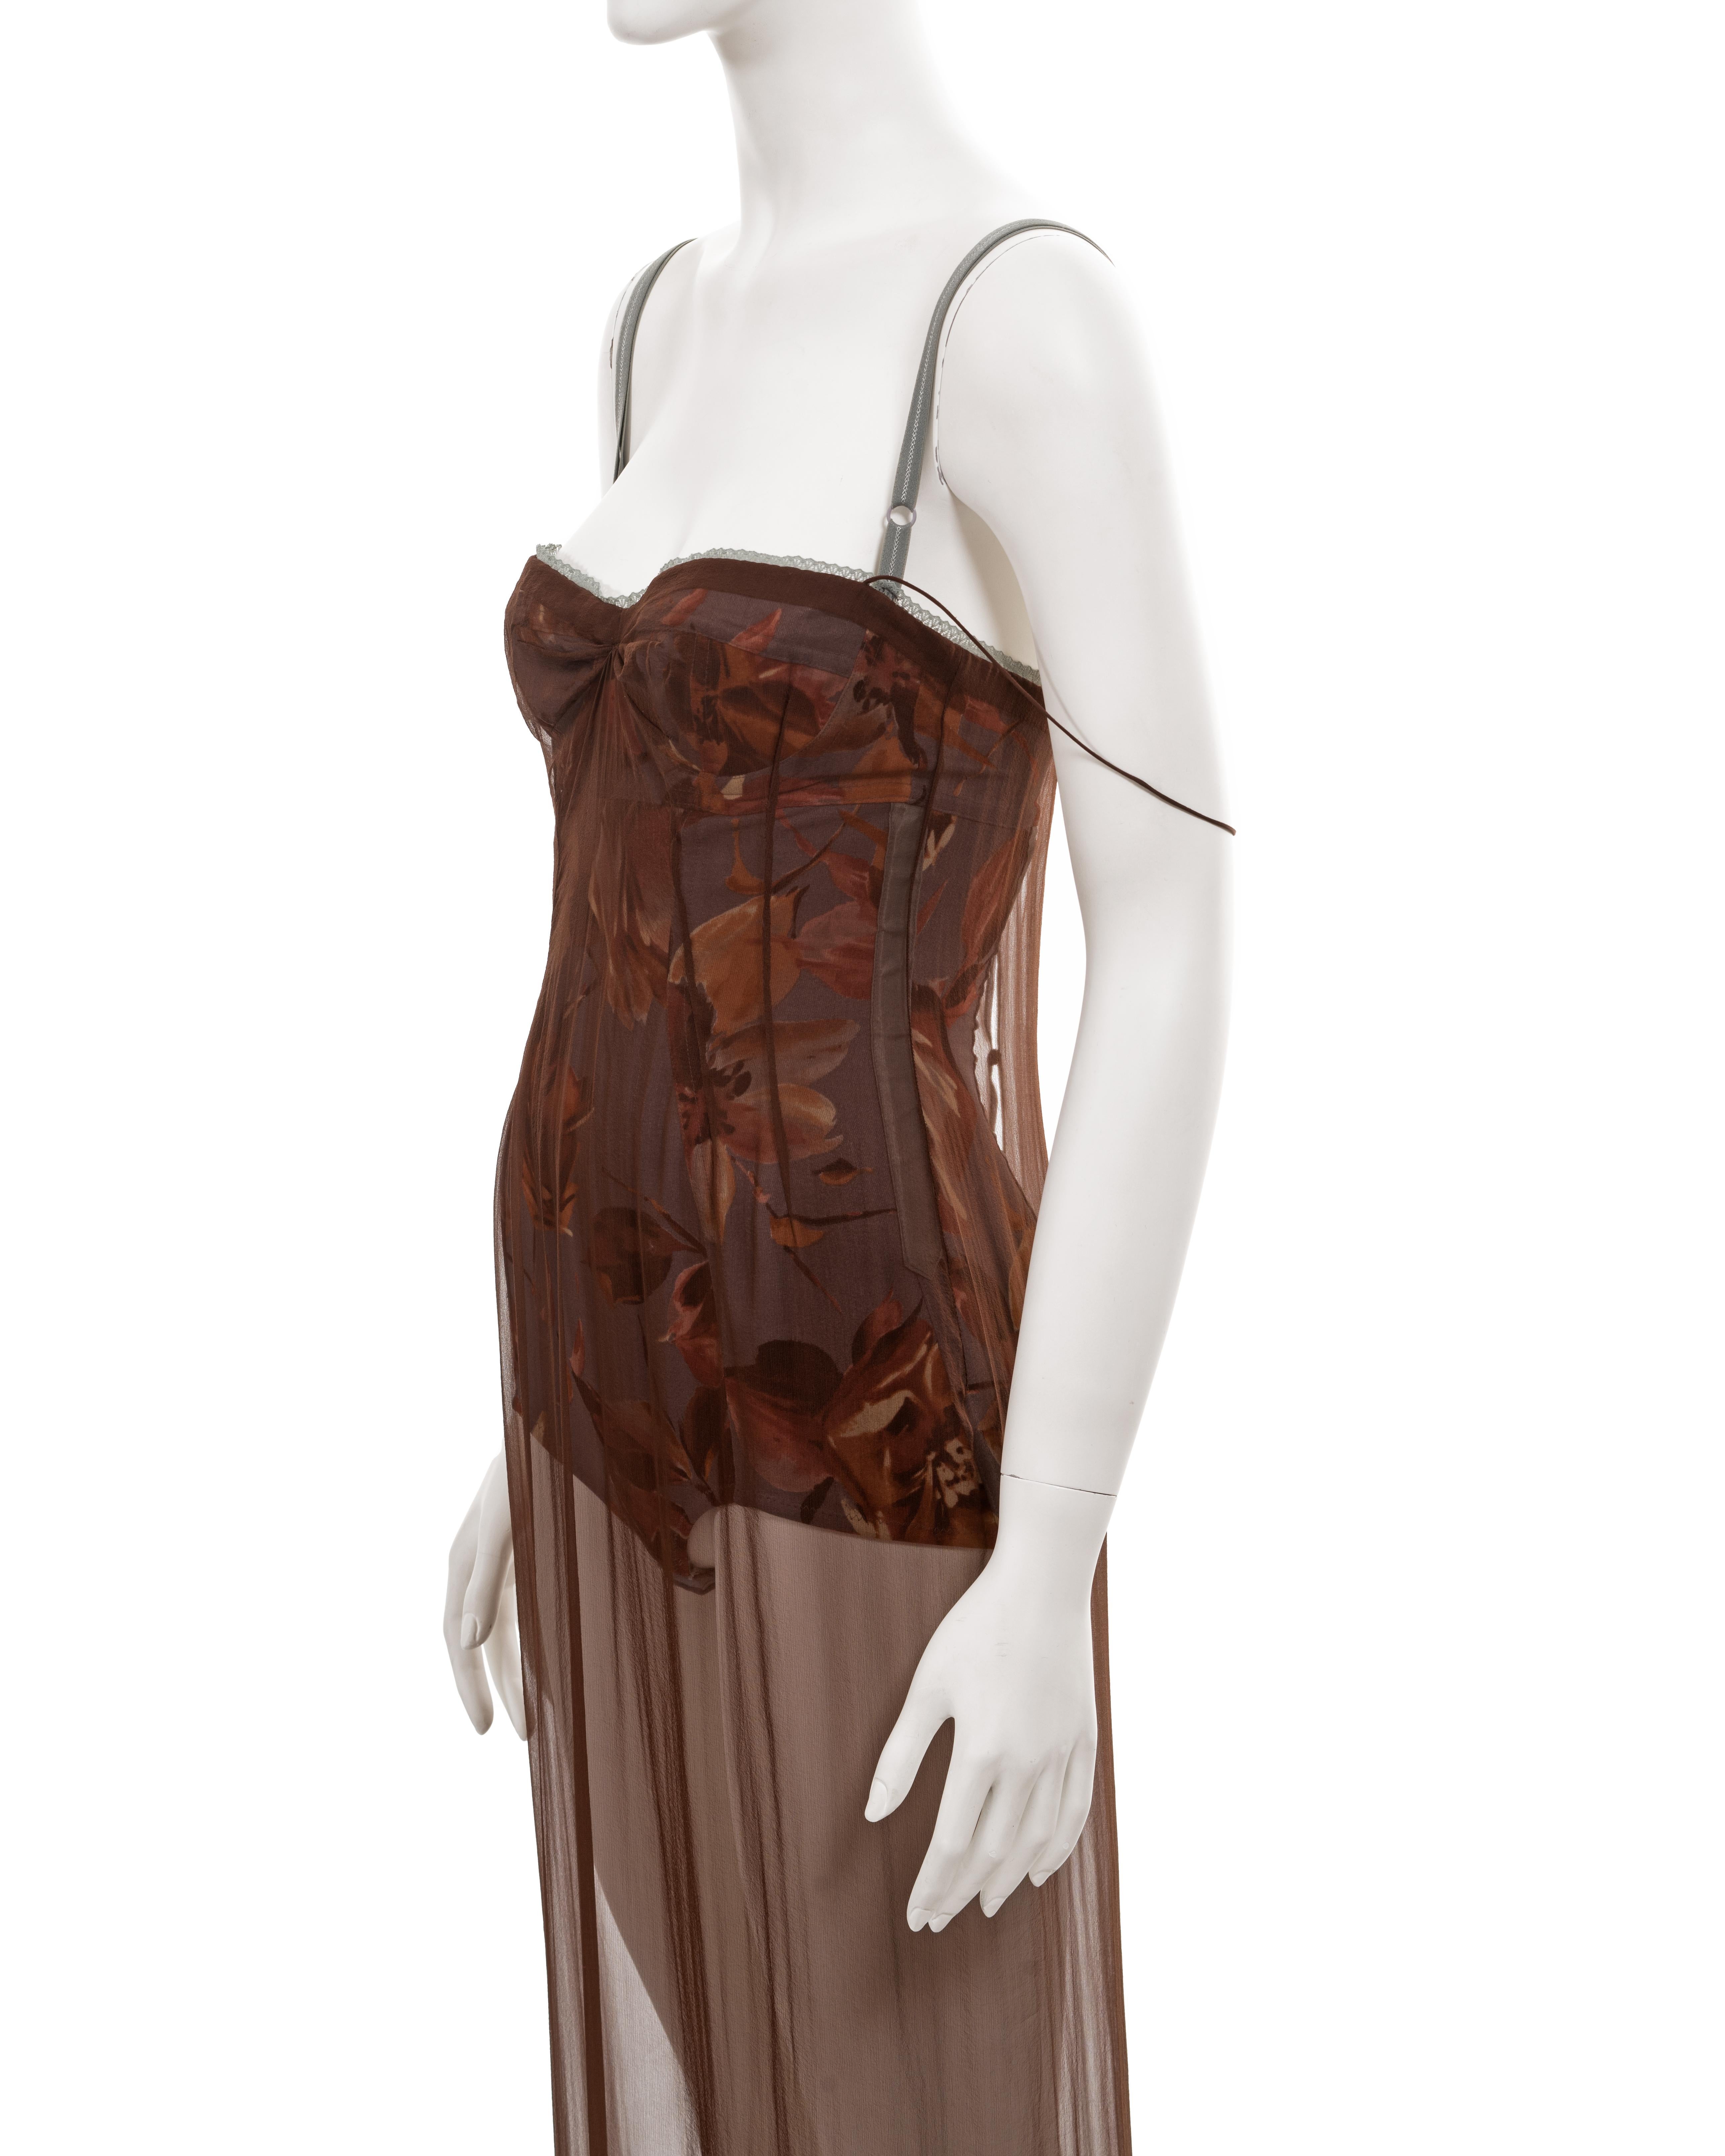 Dolce & Gabbana brown silk chiffon evening dress with built-in bodysuit, ss 1997 4